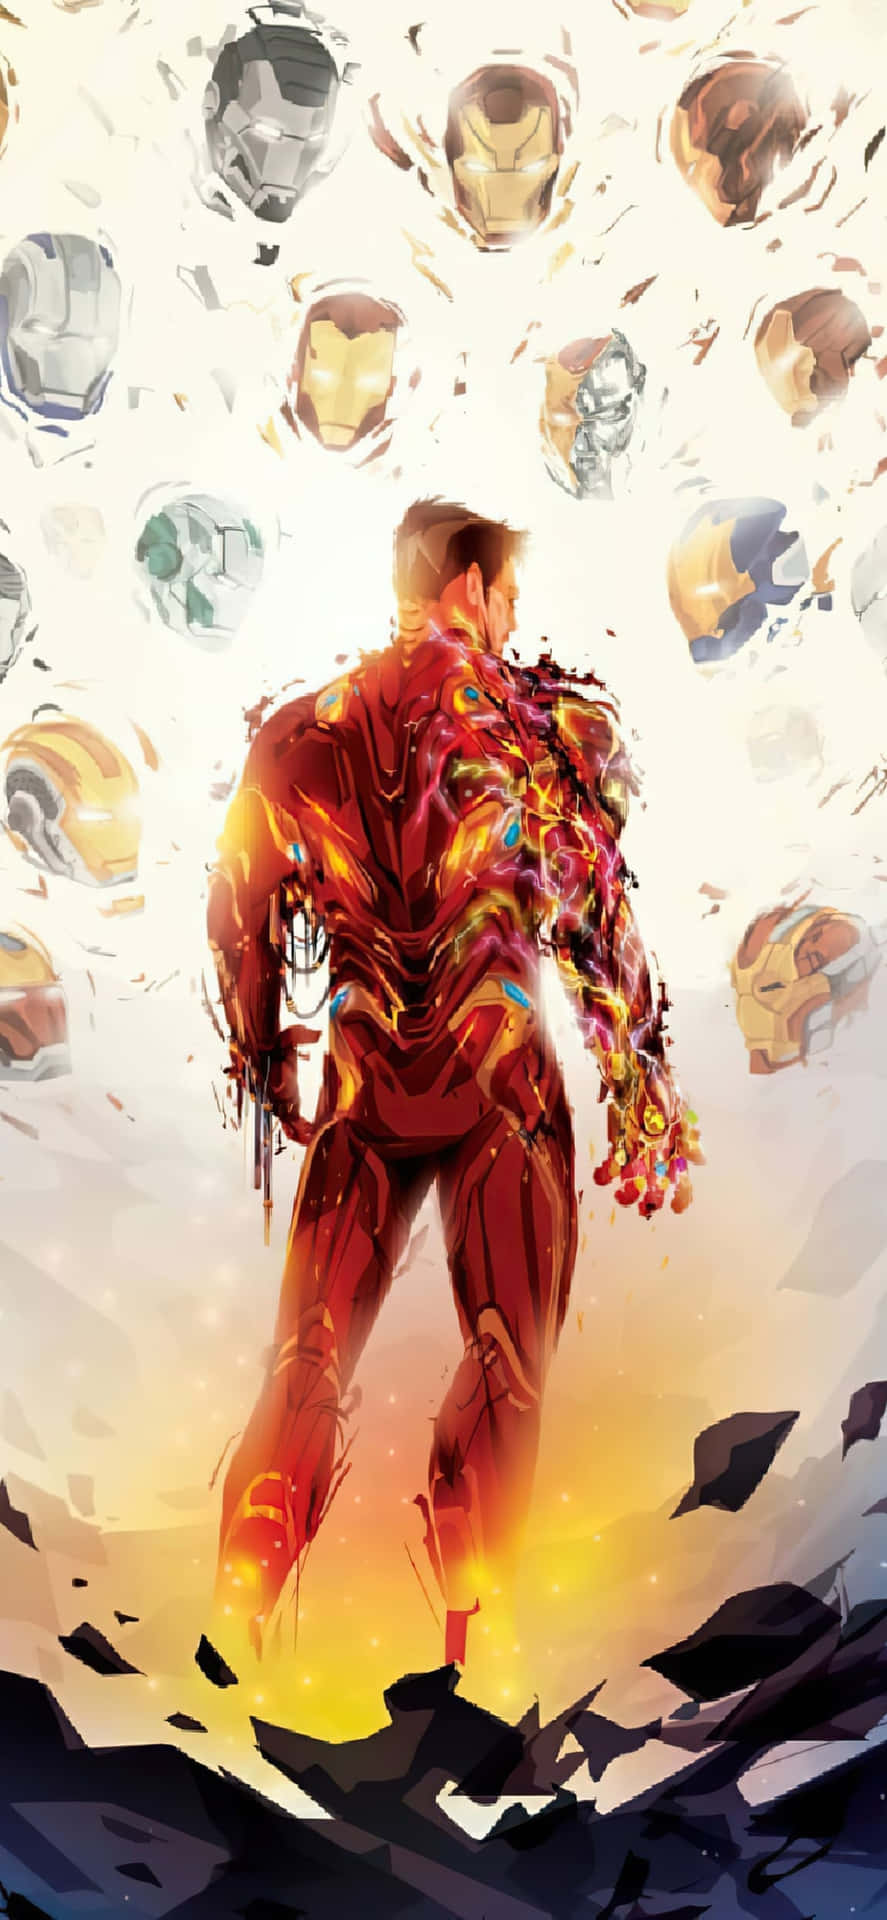 Sfondoiphone X Di Iron Man - Iron Man Circondato Da Vari Elmetti